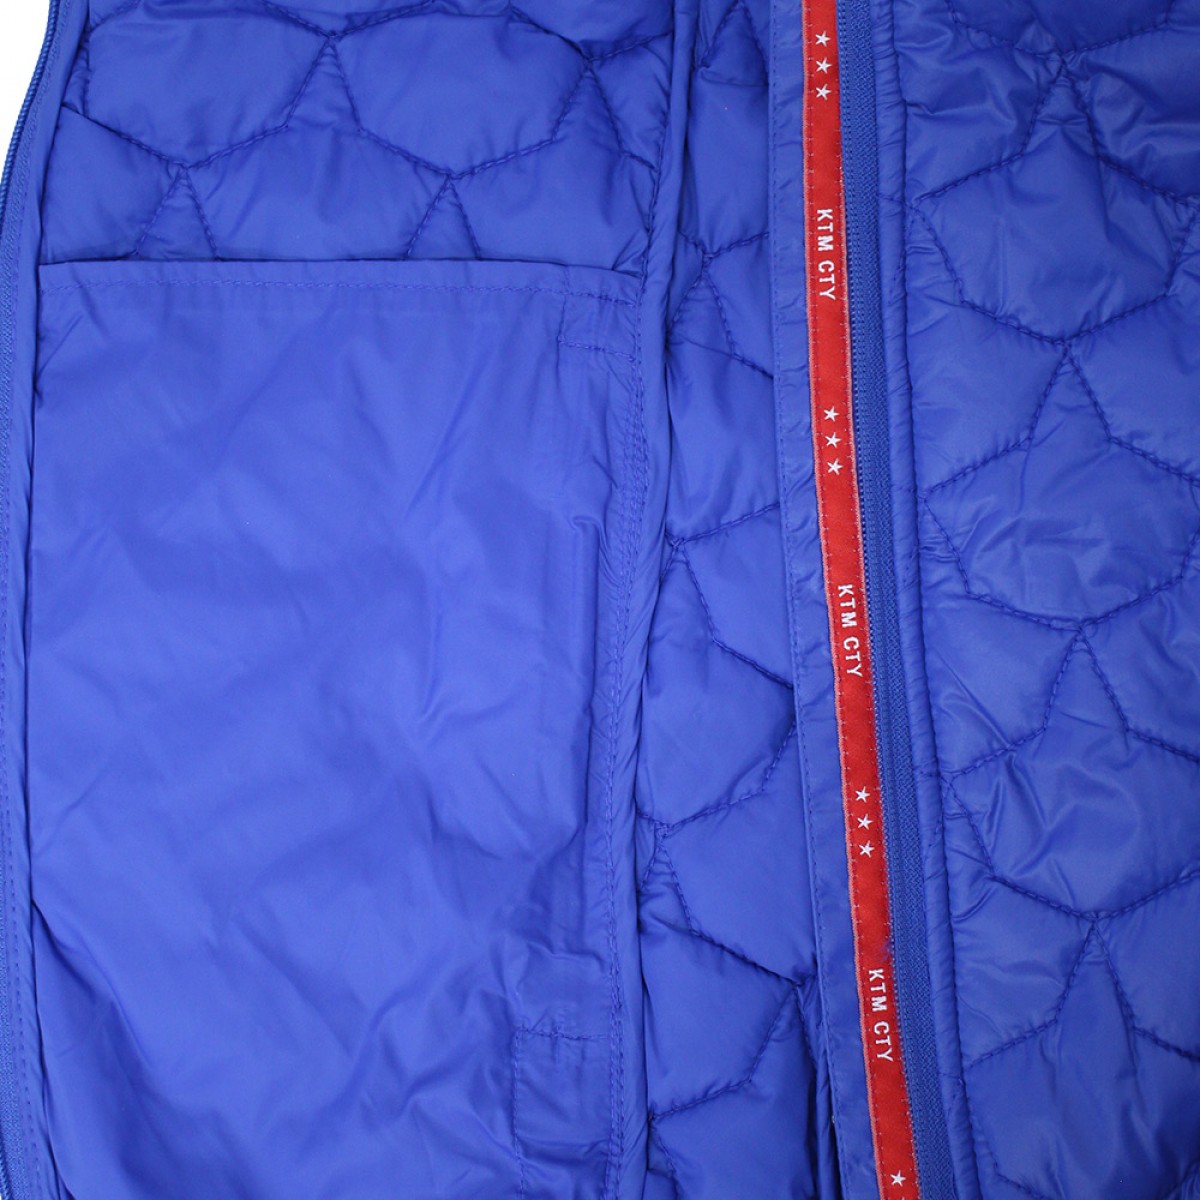 men-polyfiber-half-jacket-kpj05912-5b